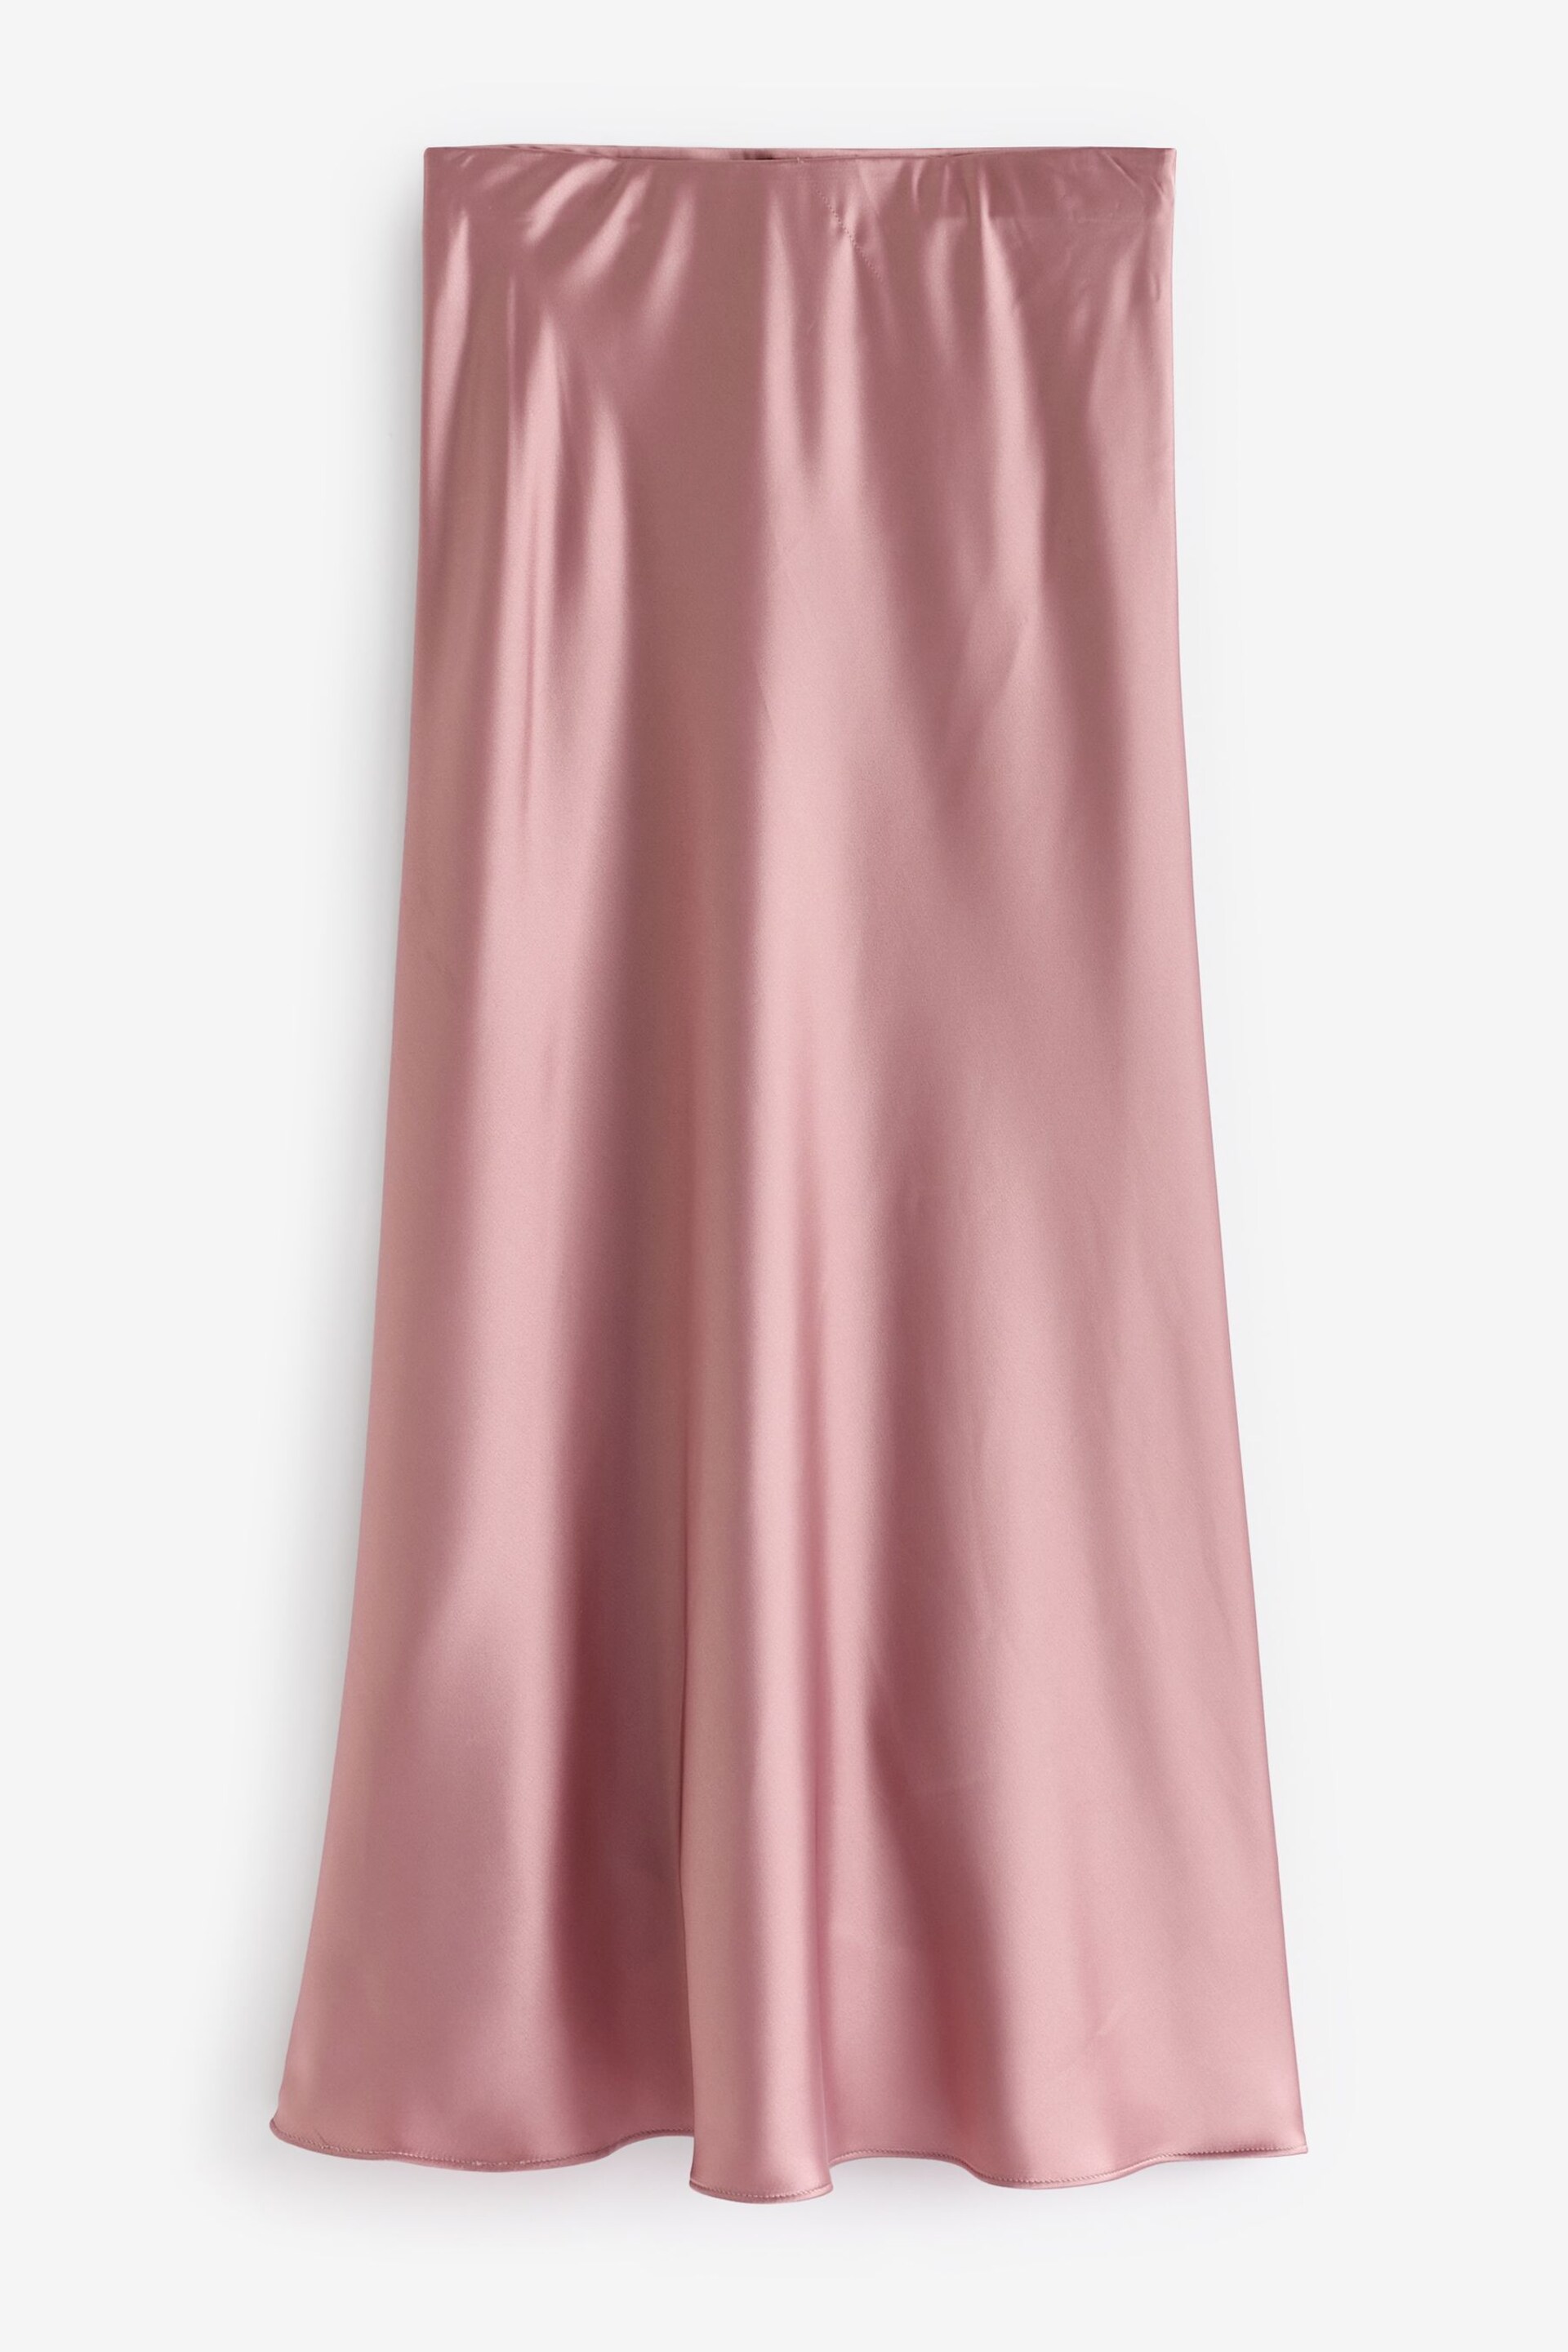 Rose Pink Tailored Satin Midi Skirt - Image 4 of 4